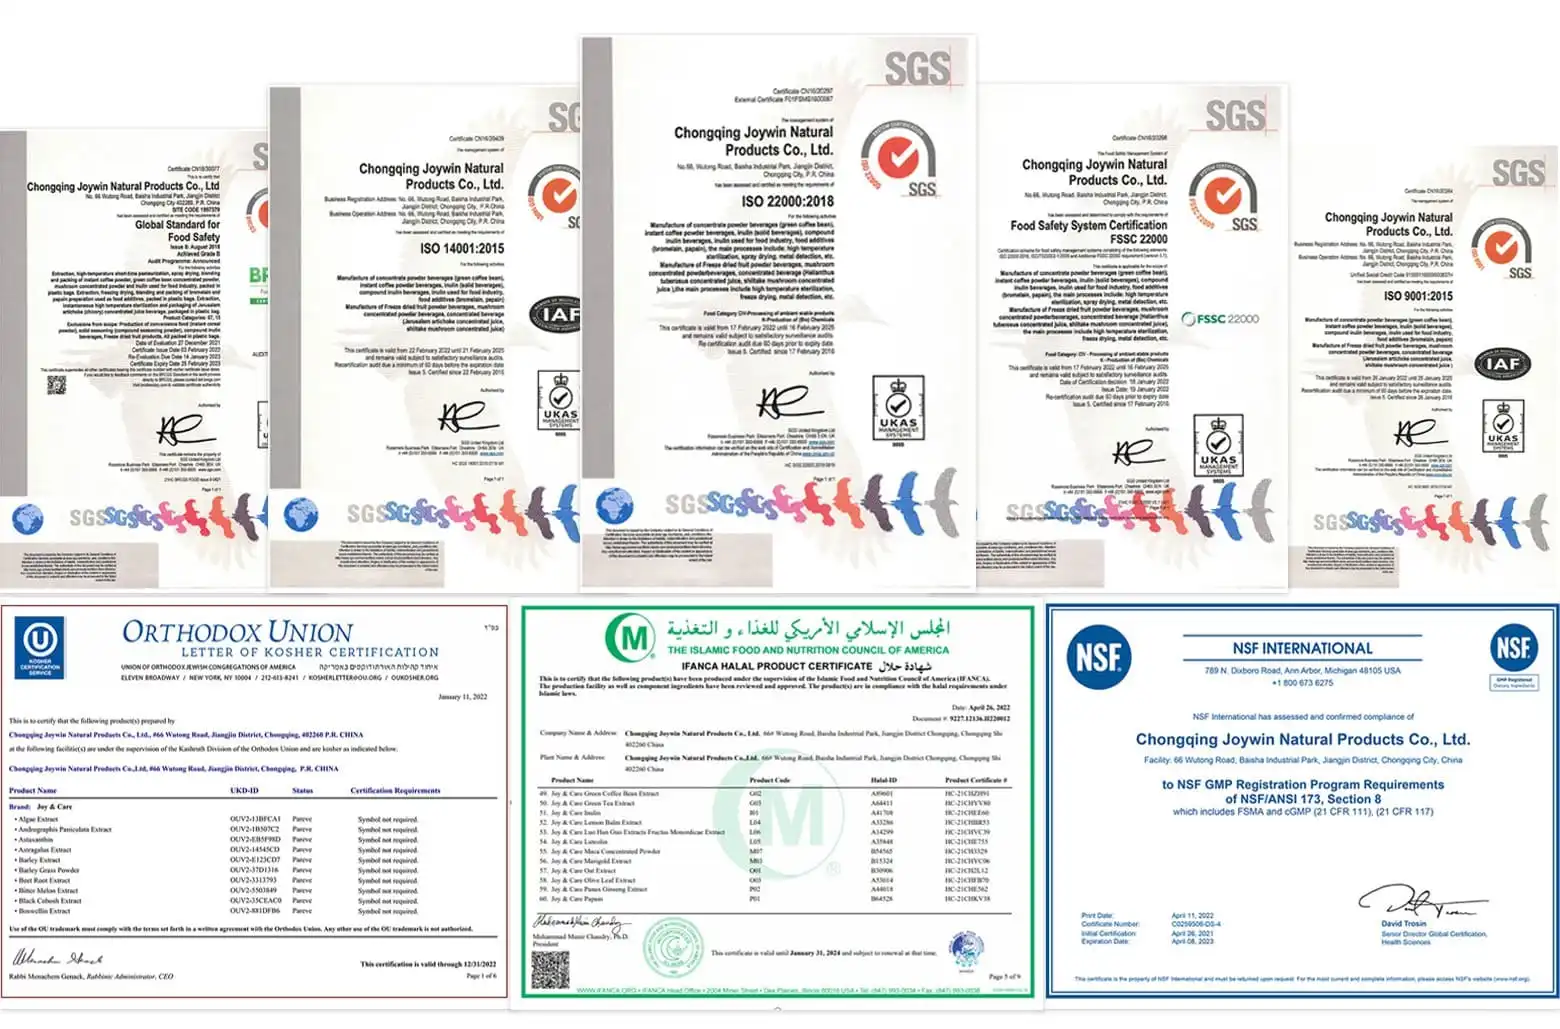 RyonBio certificates